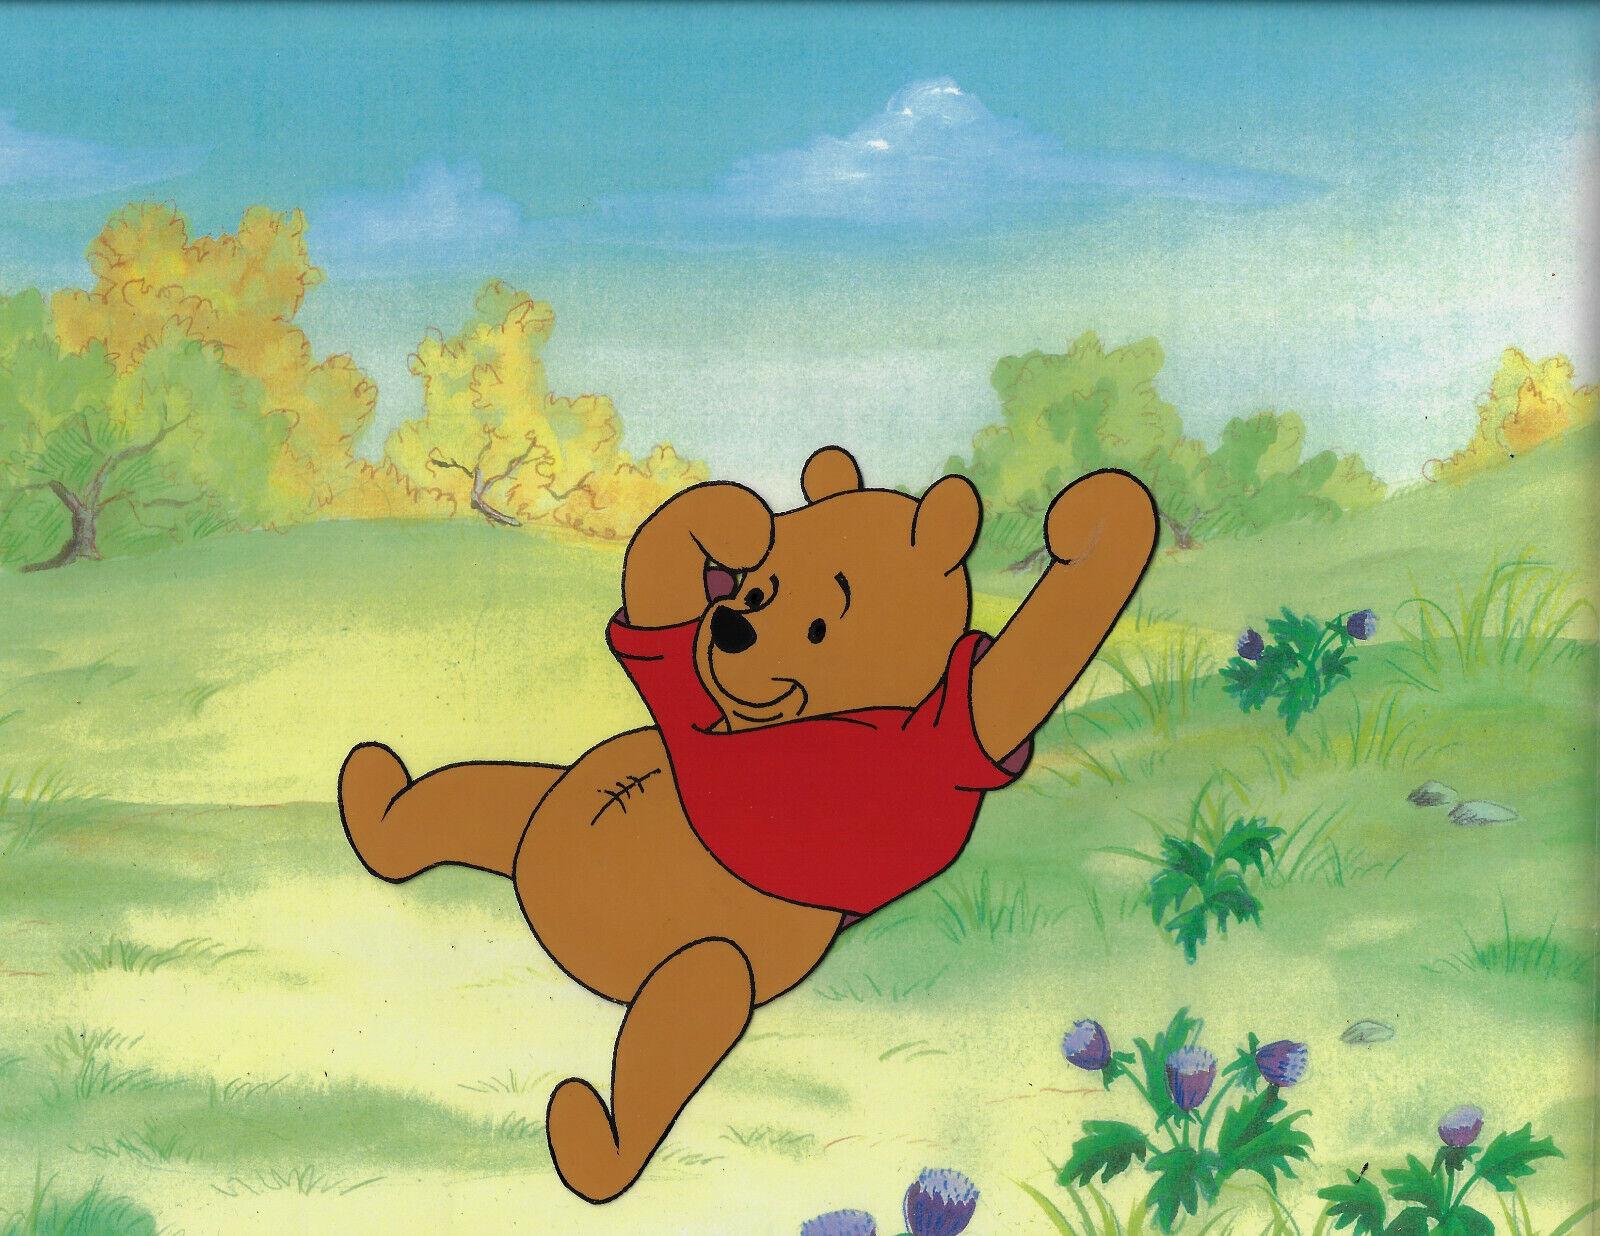 Disney's Winnie the Pooh Original Production Cel: Pooh - Art by Walt Disney Studio Artists